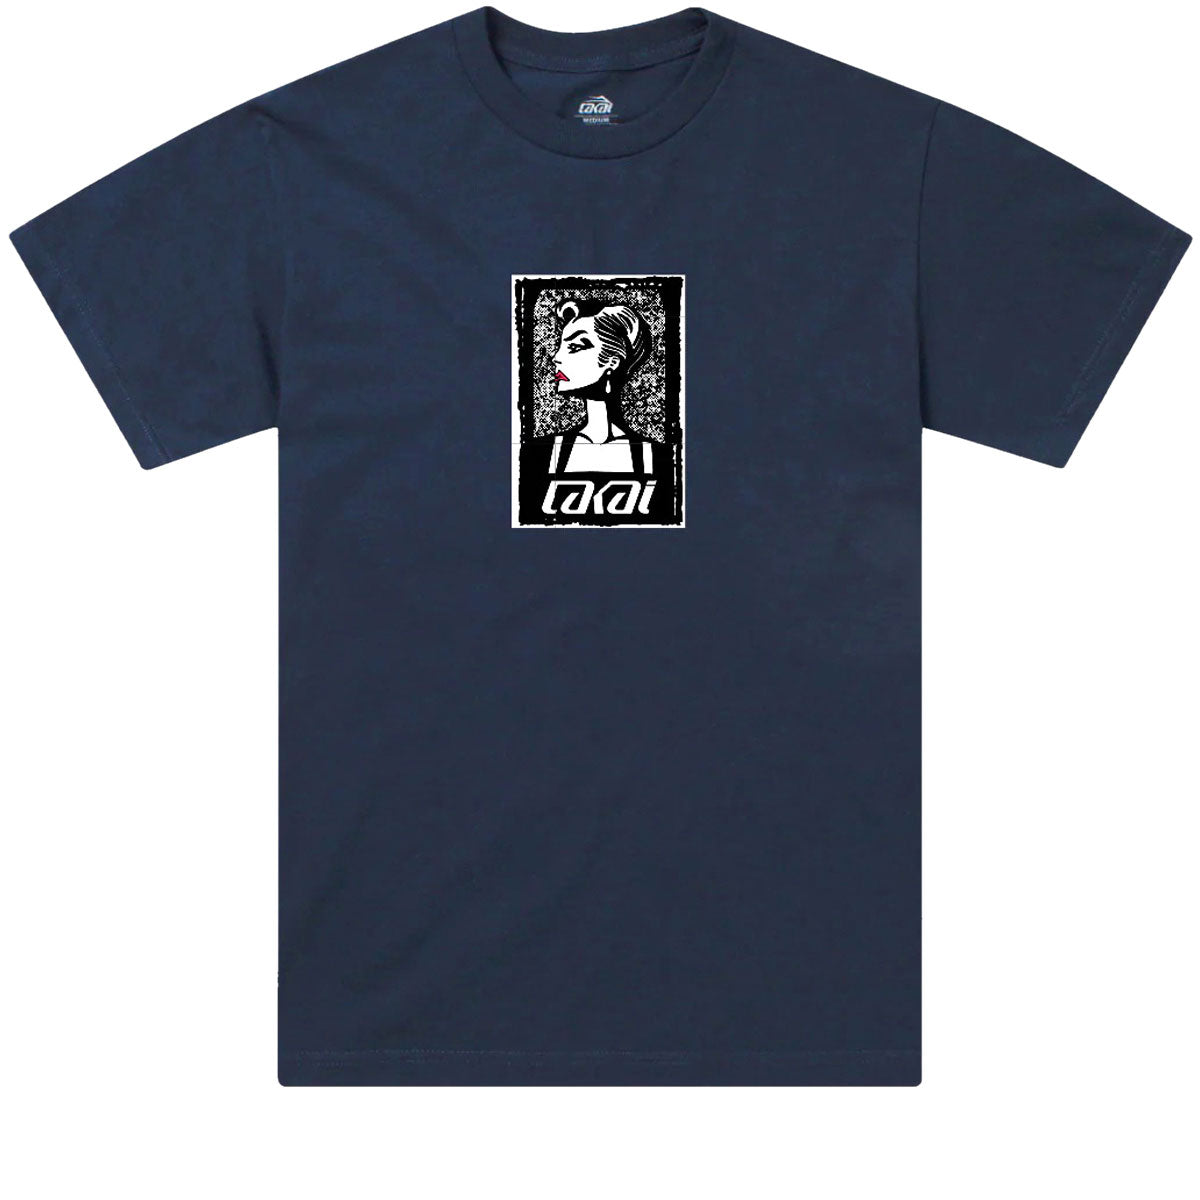 Lakai Nouveau T-Shirt - Navy image 1